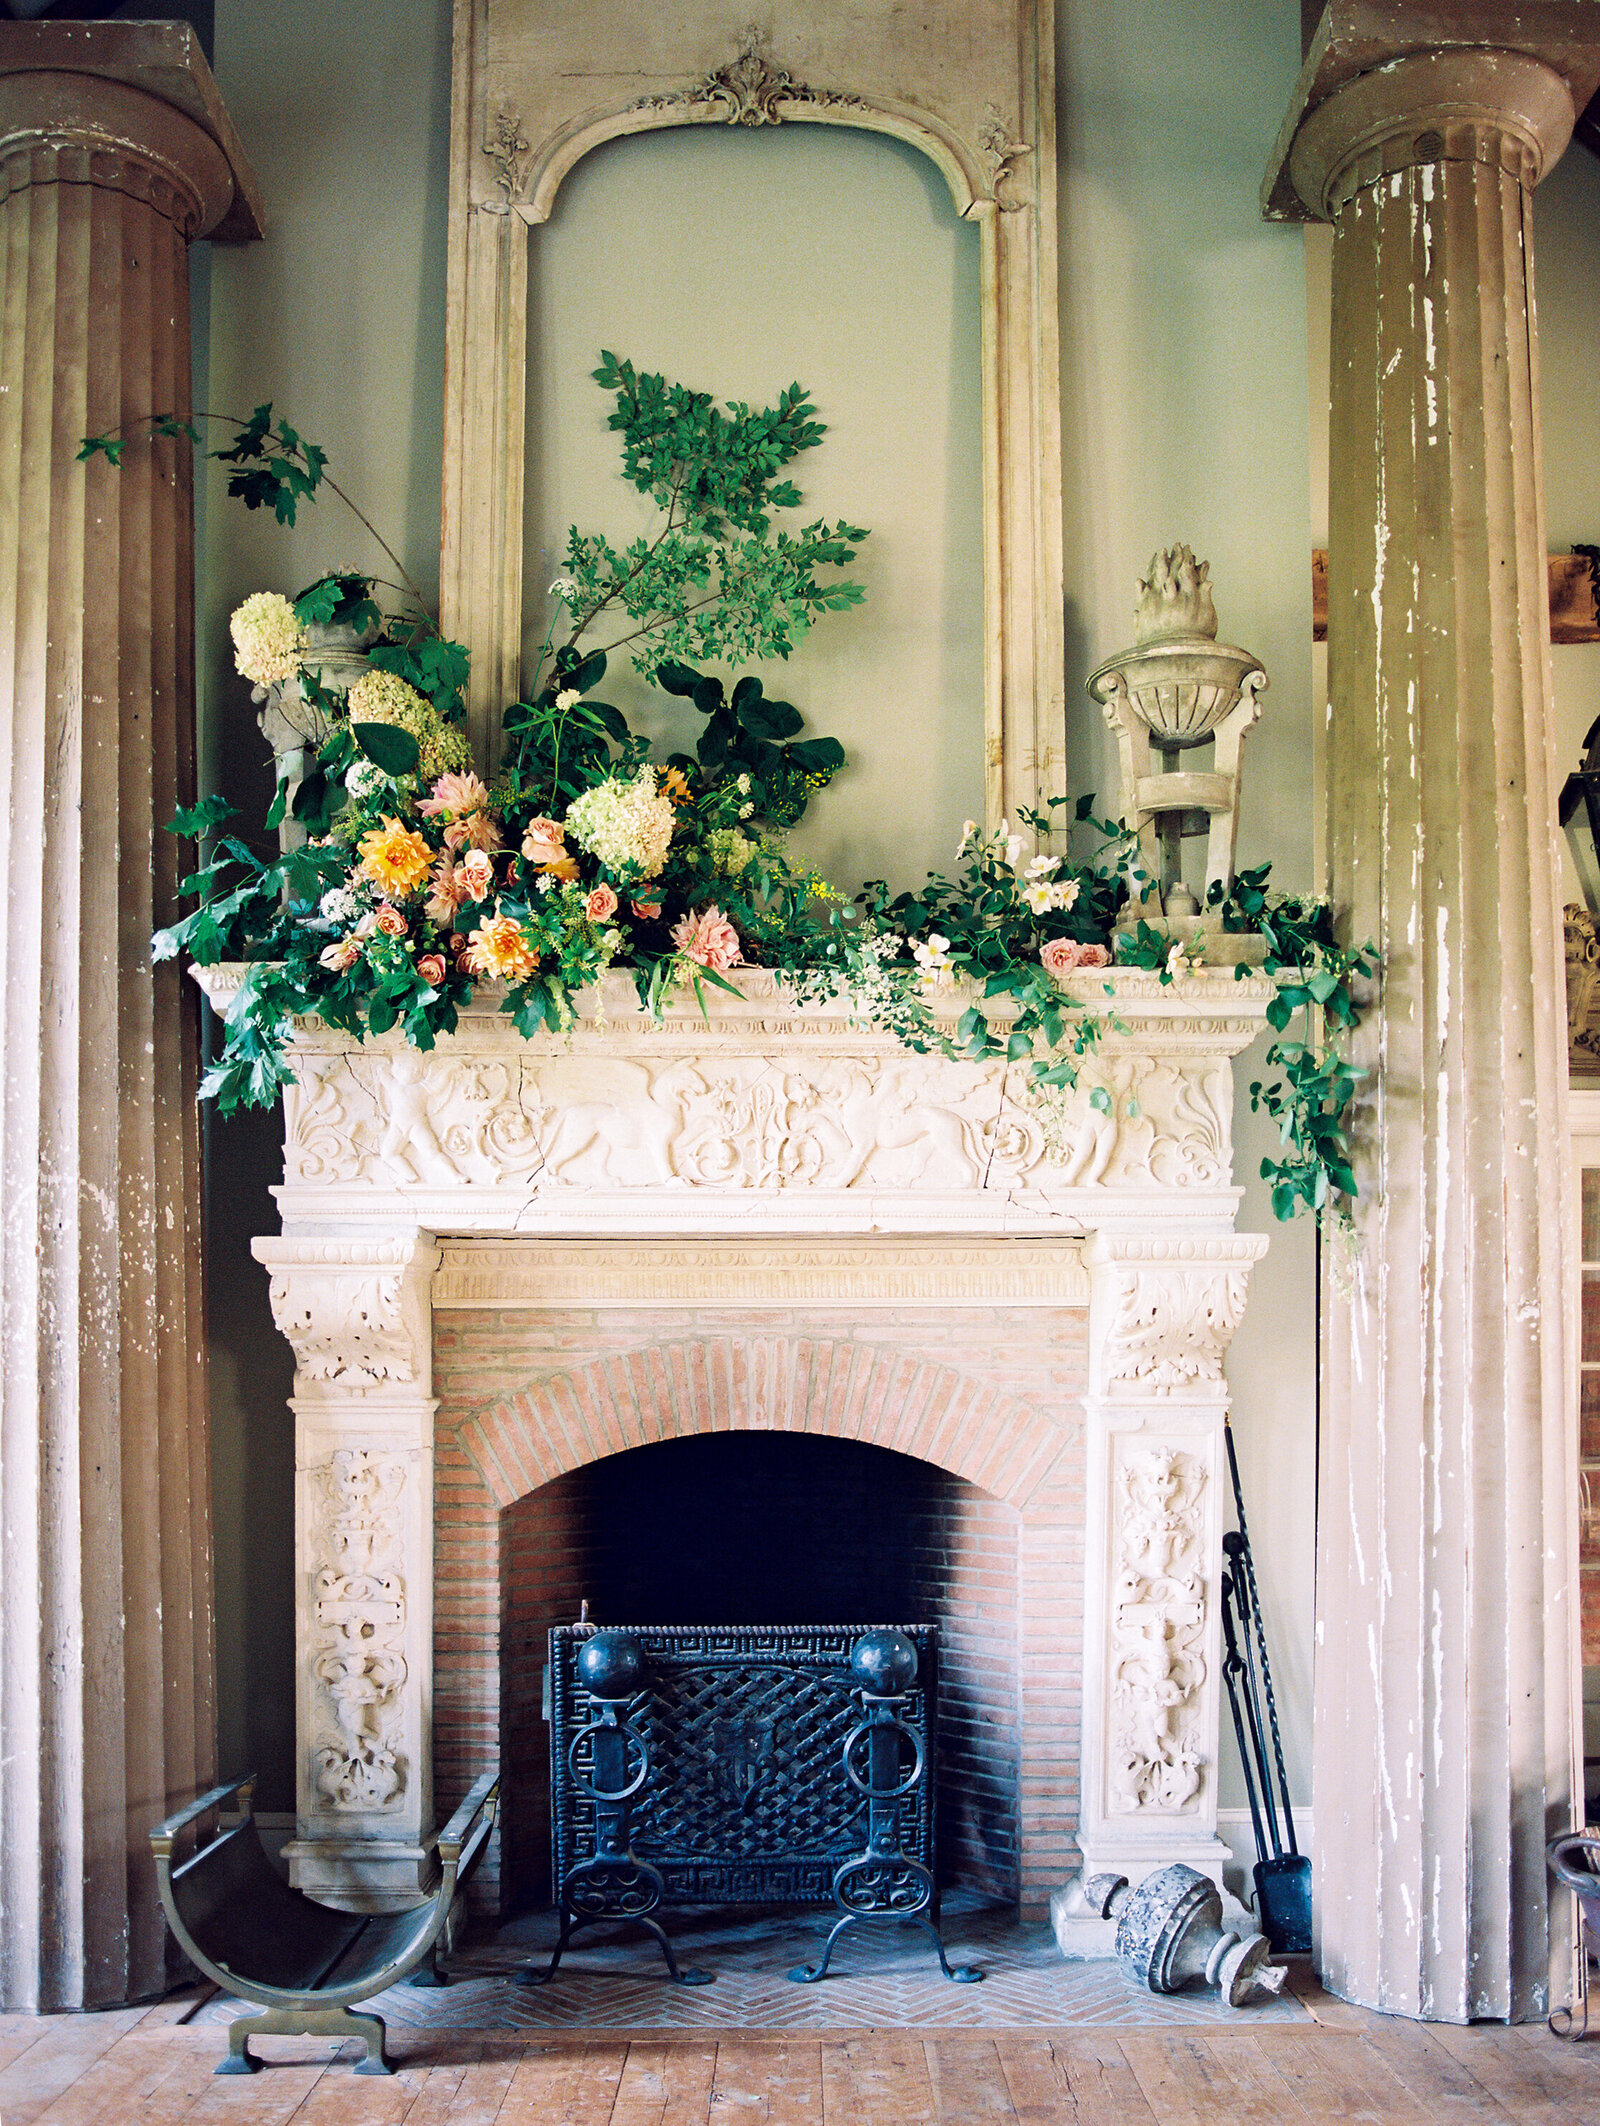 max-owens-design-at-home-floral-arrangements-10-fireplace-mantle